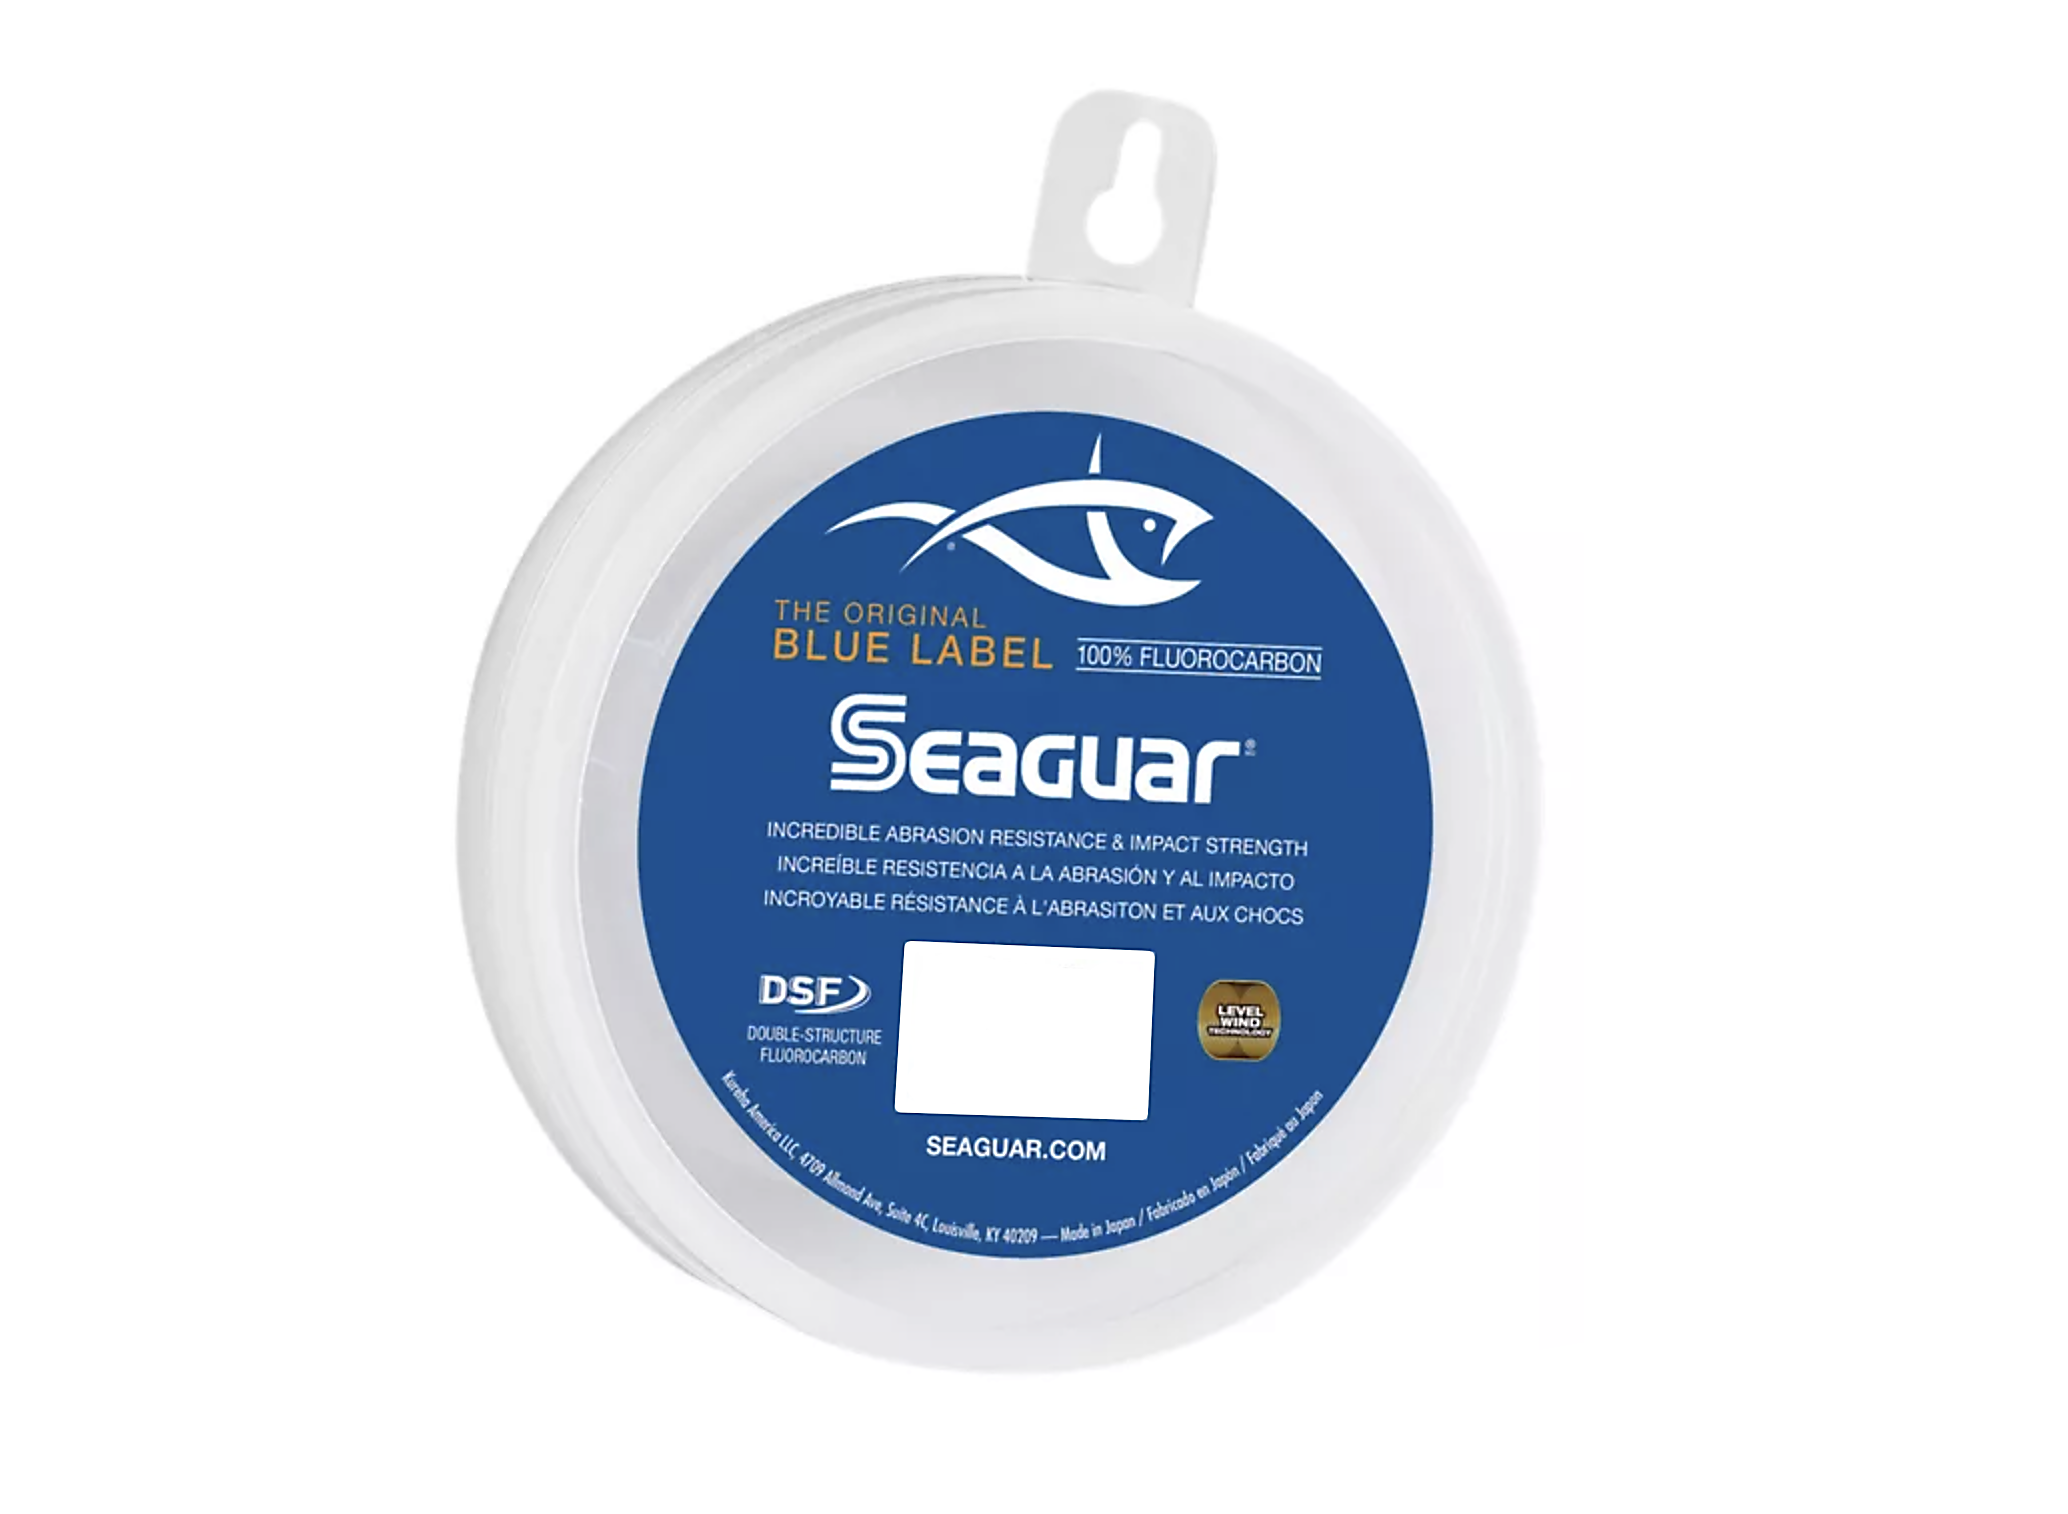 Seaguar 蓝标氟碳